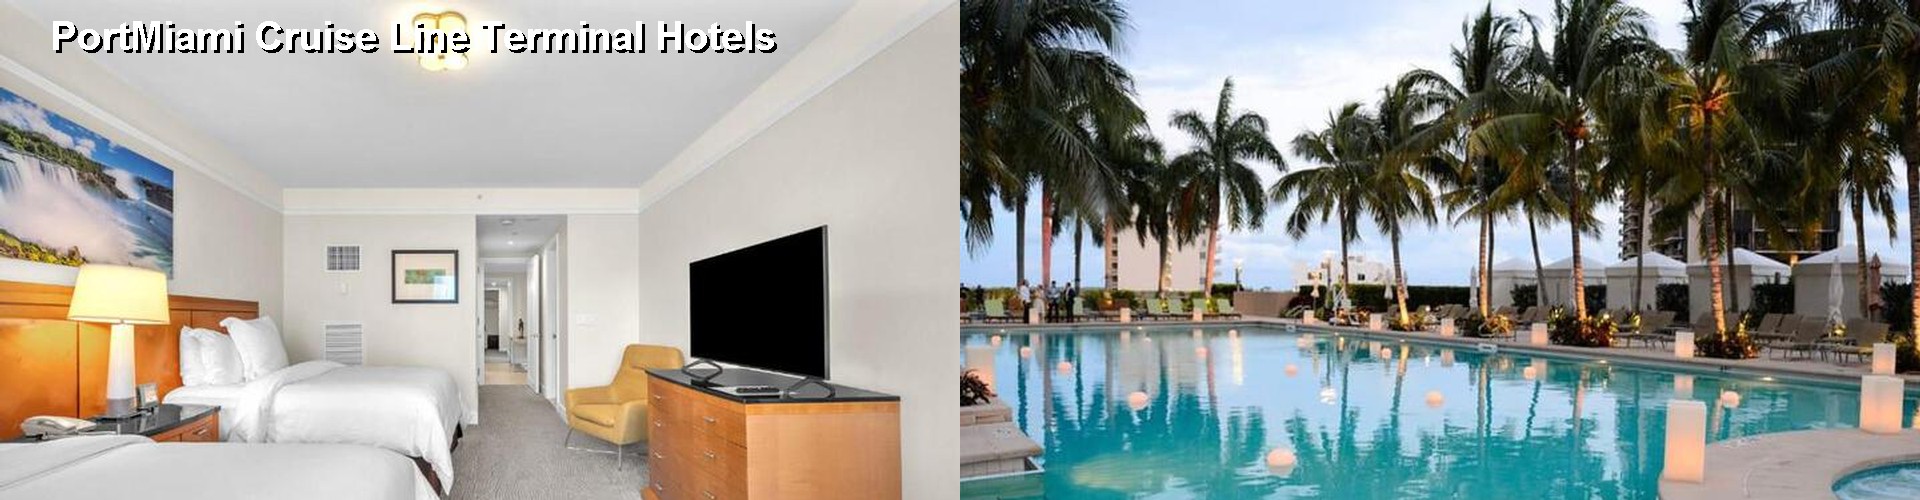 4 Best Hotels near PortMiami Cruise Line Terminal